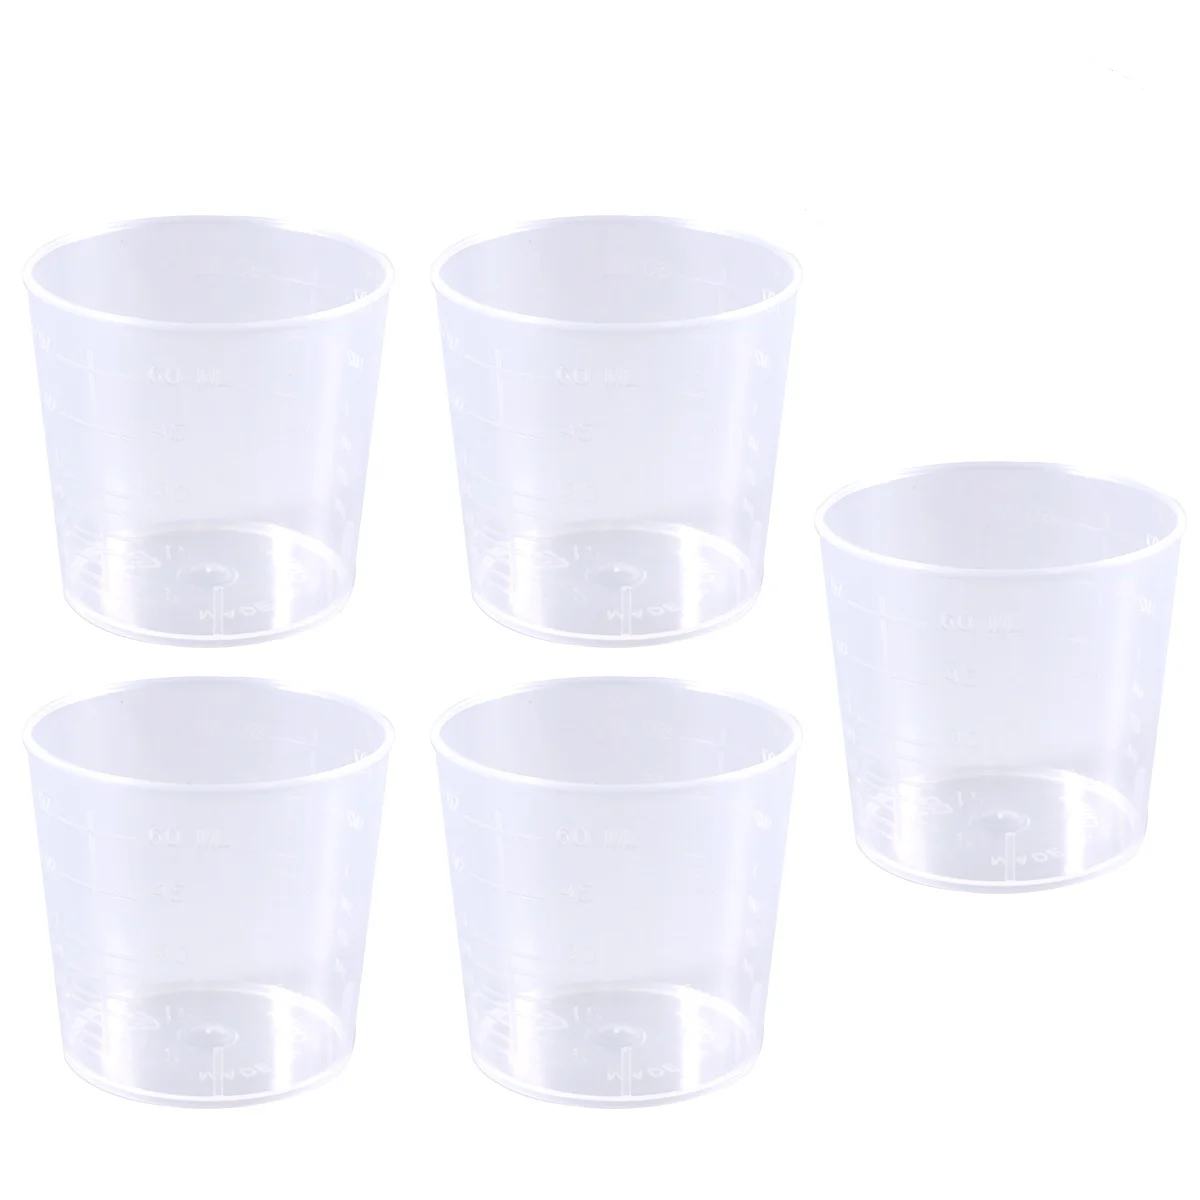 

10pcs 60mL Plastic Graduation Beakers Measurement Beaker Measuring Cups and Cooking Liquid Container Mixing Cup